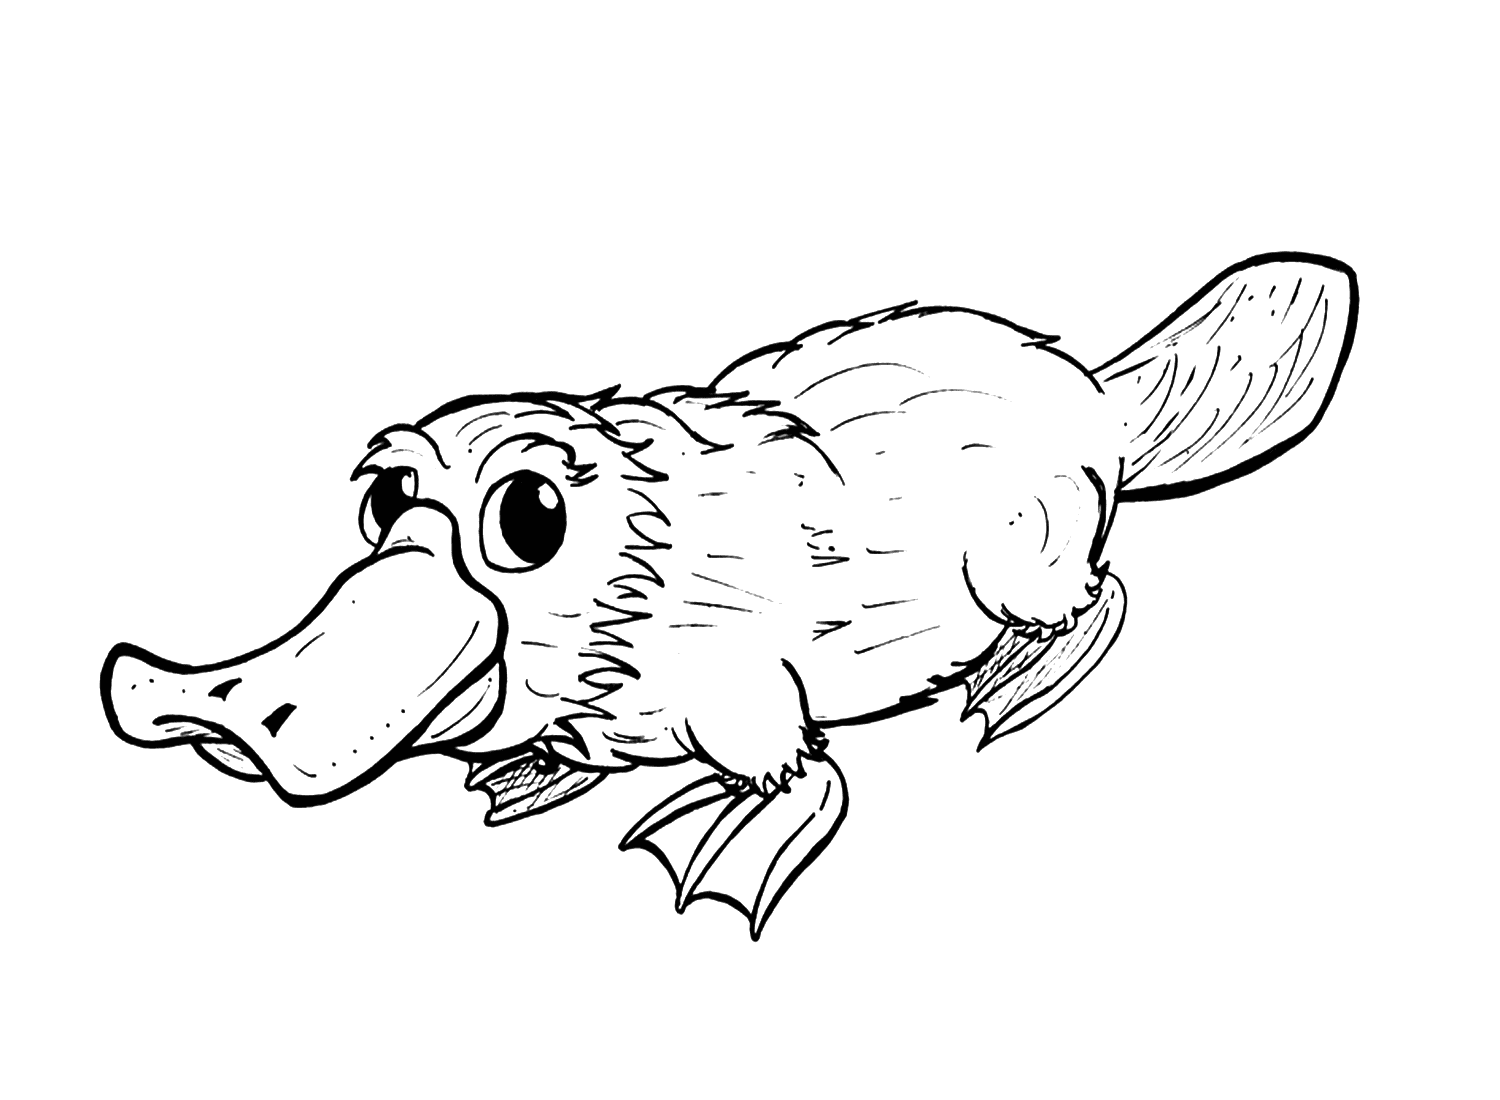 Realistisch Vogelbekdier van Platypus